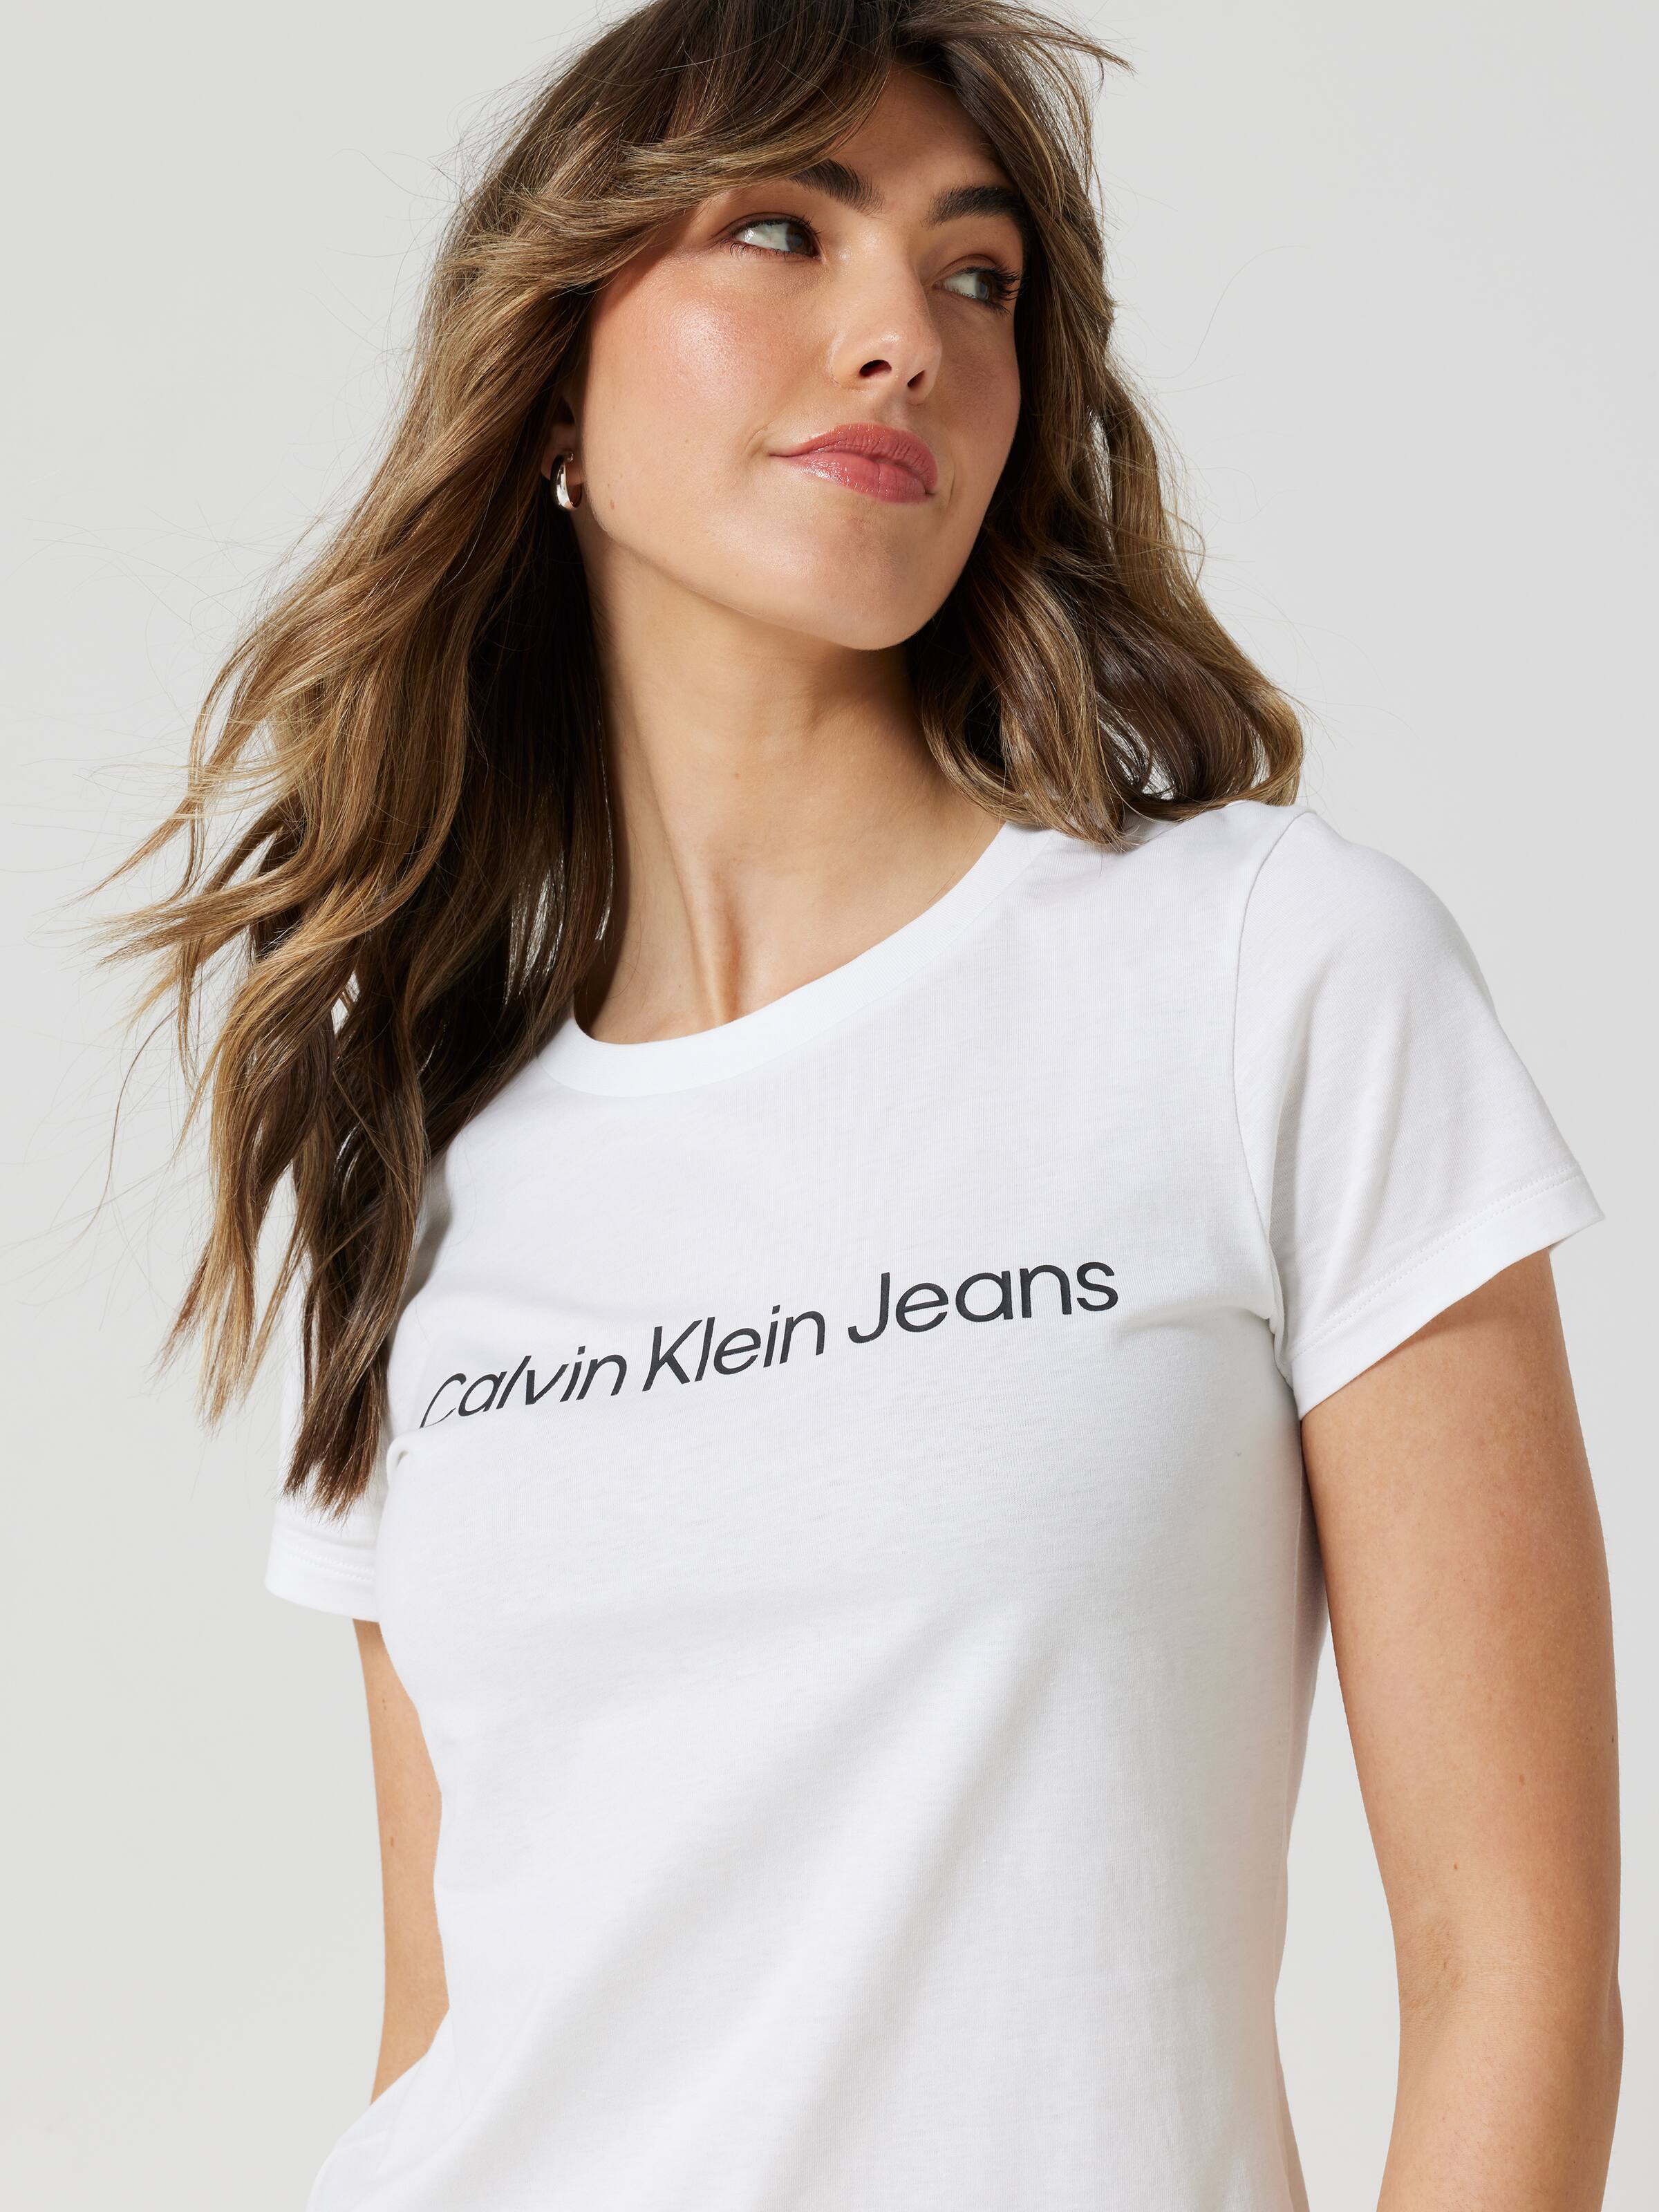 Calvin Klein Jeans store, Melbourne